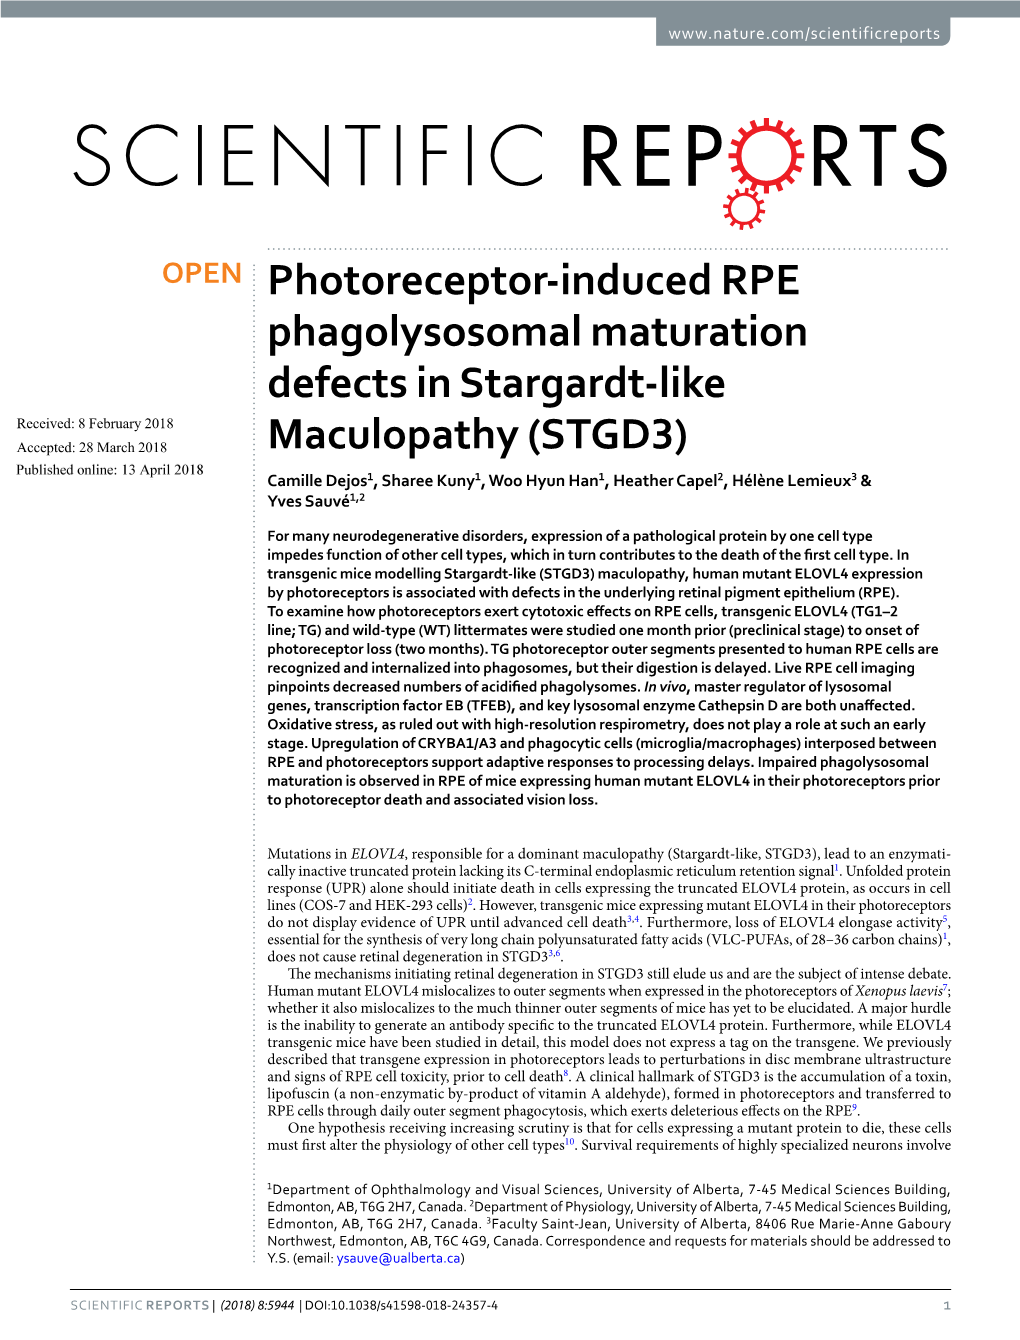 Photoreceptor-Induced RPE Phagolysosomal